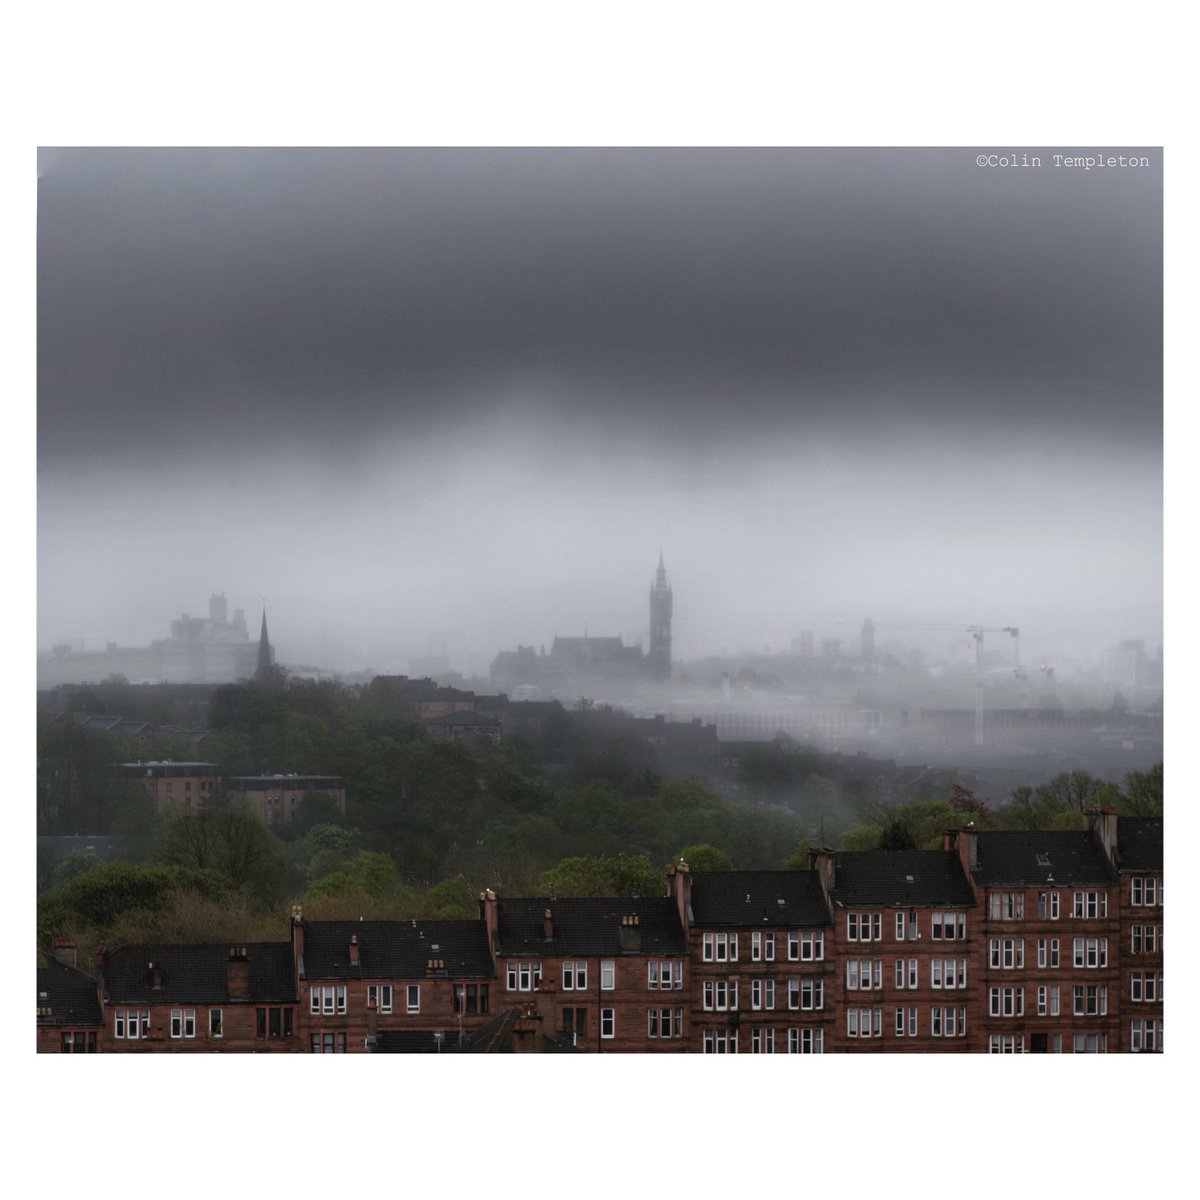 Rainy skies over Glasgow University